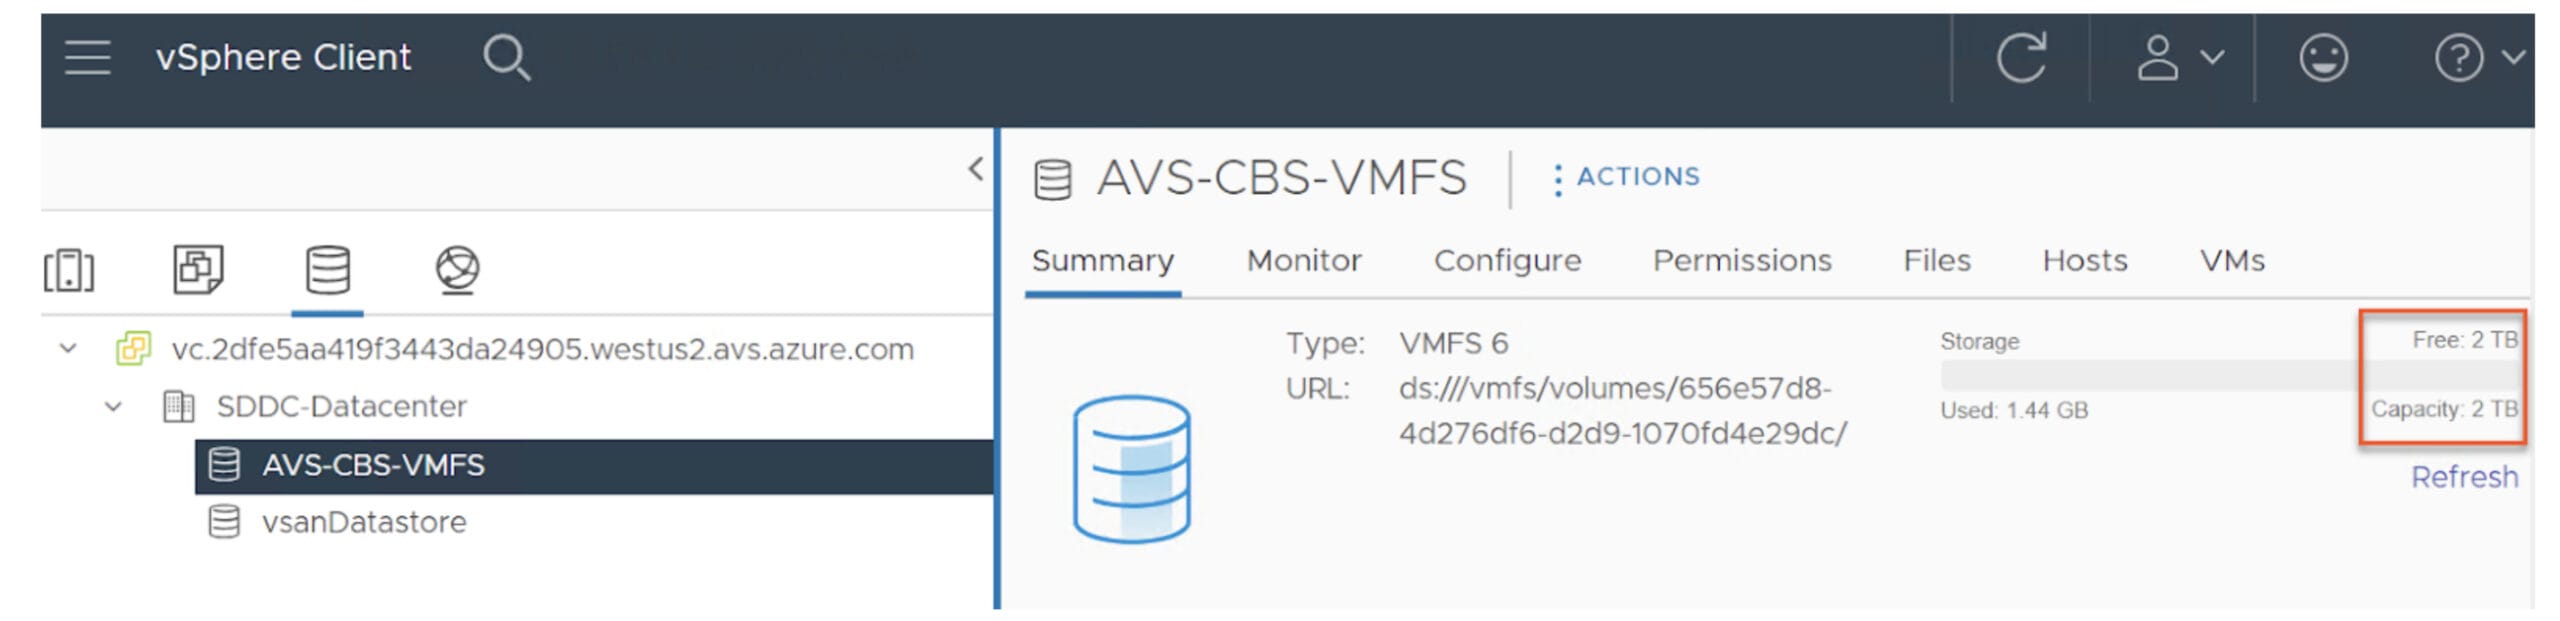 VMFS Management on Azure VMware Solution